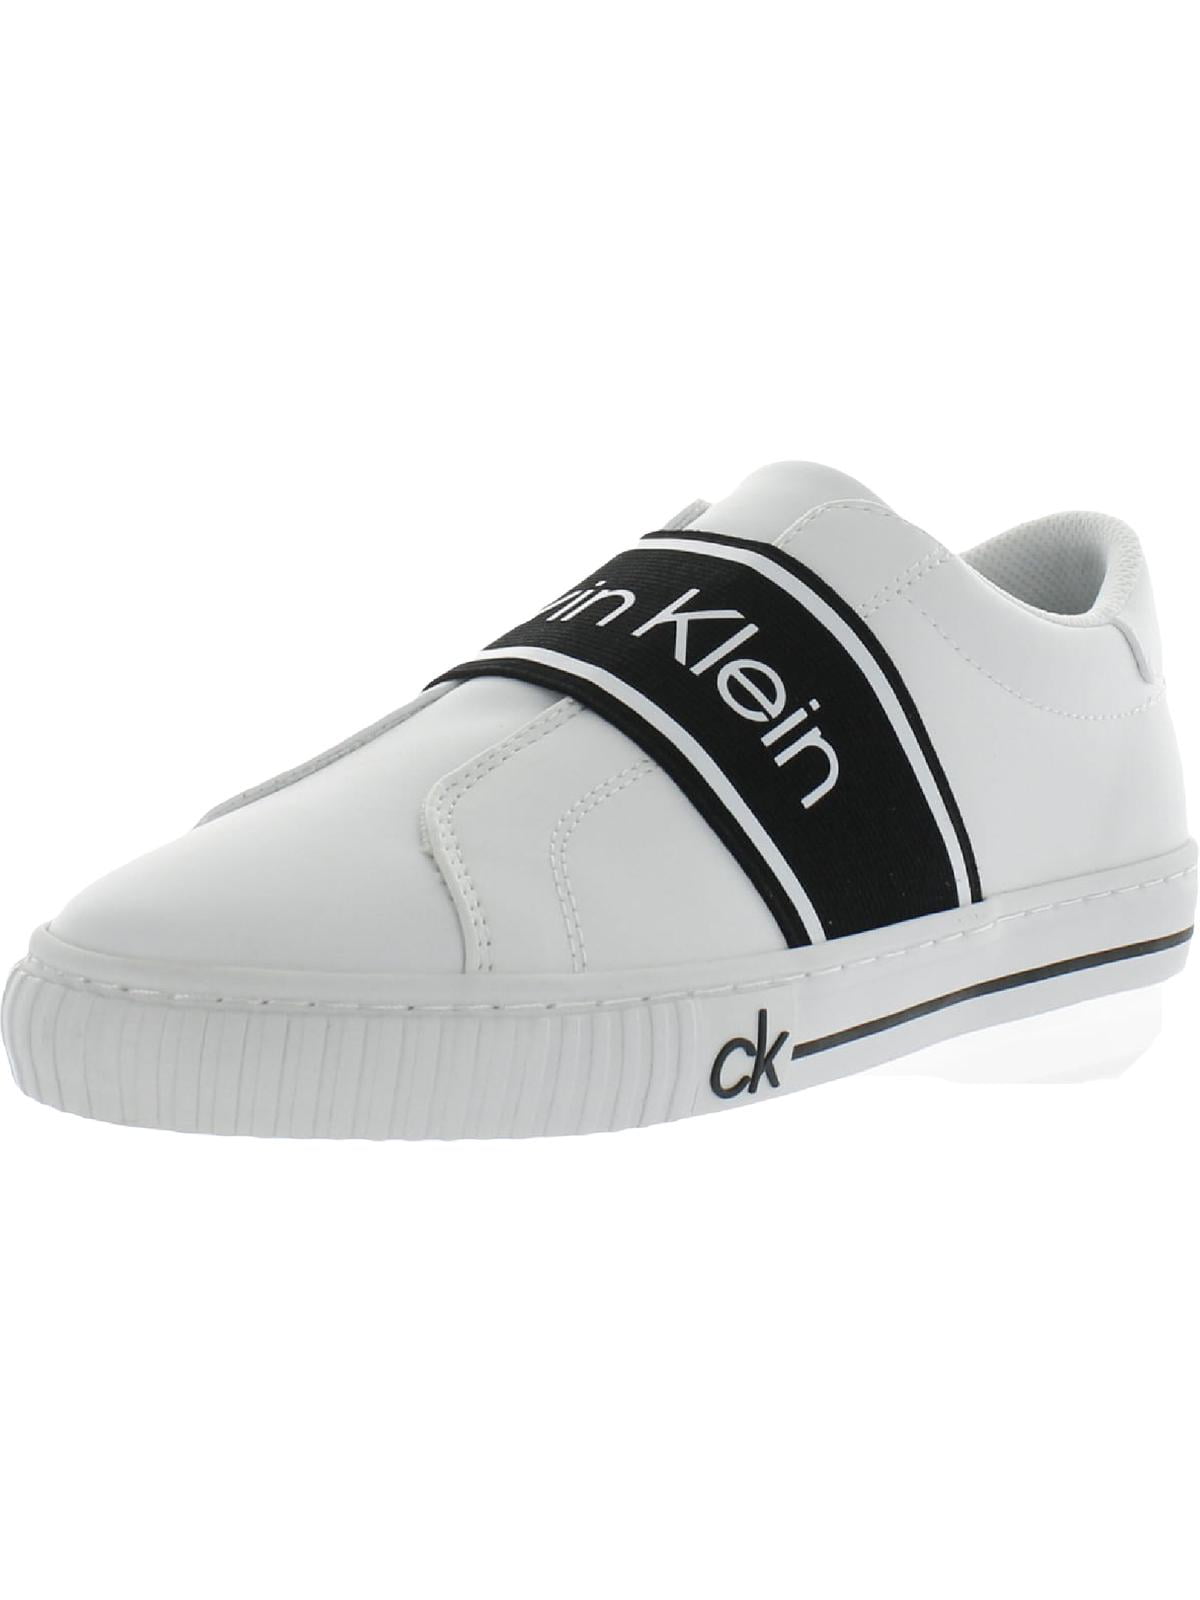 Calvin Klein Womens Clairen Casual and Fashion Sneakers White 9 (B,M) - Walmart.com